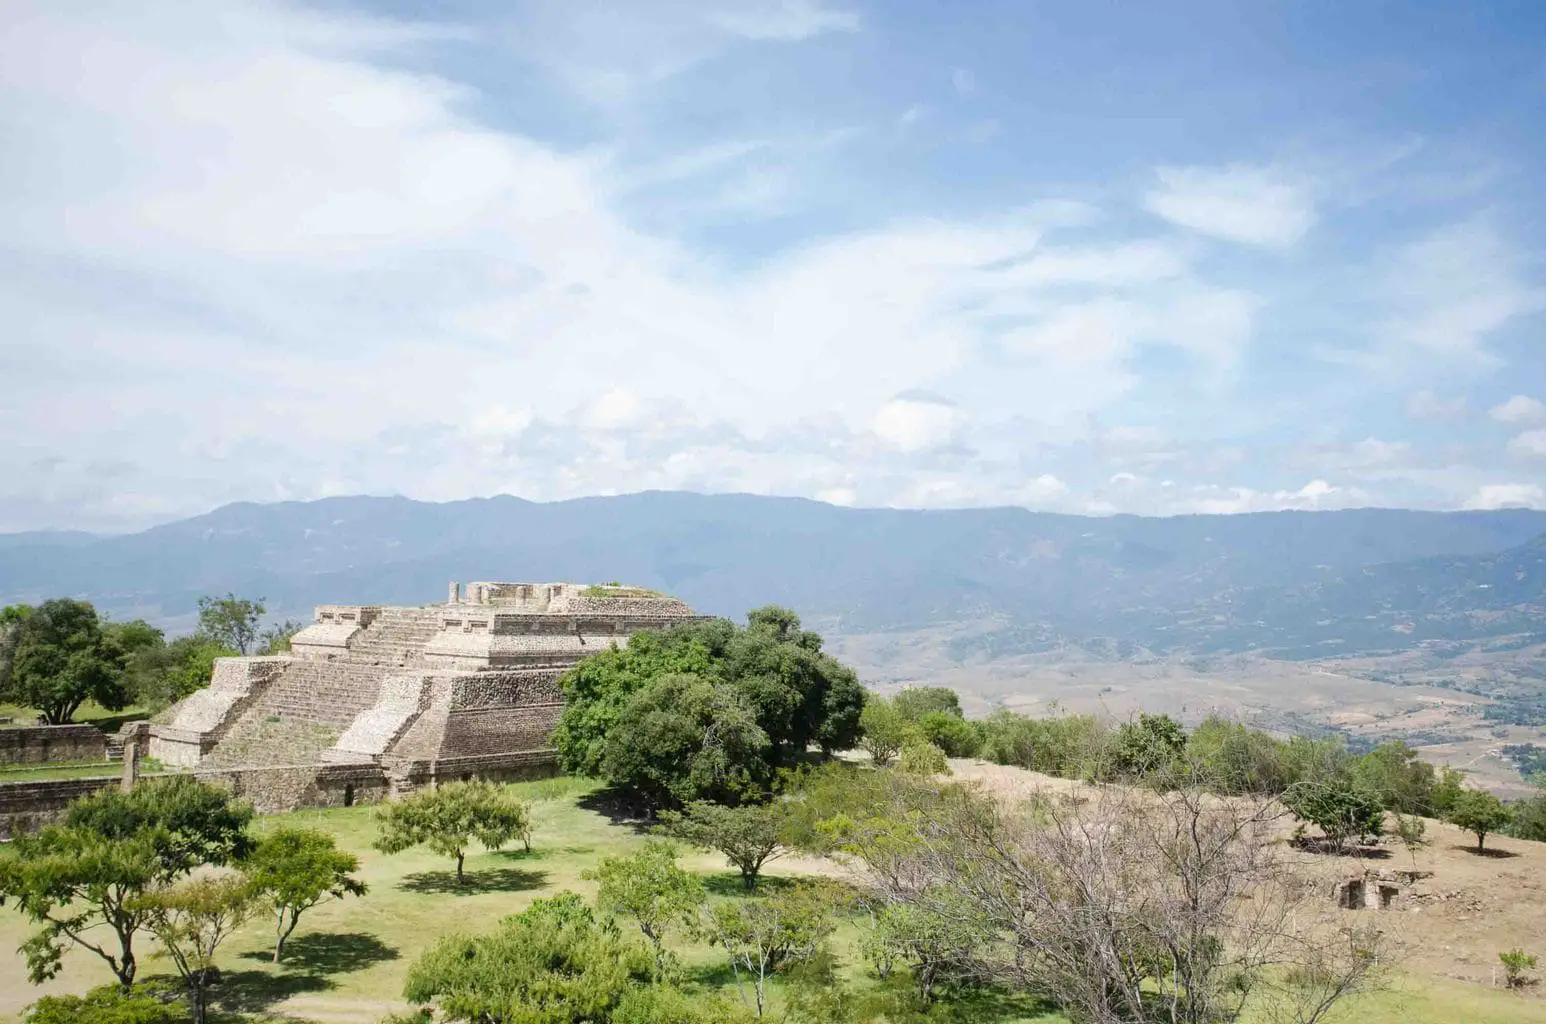 Monté Alban in Oaxaca, Mexico